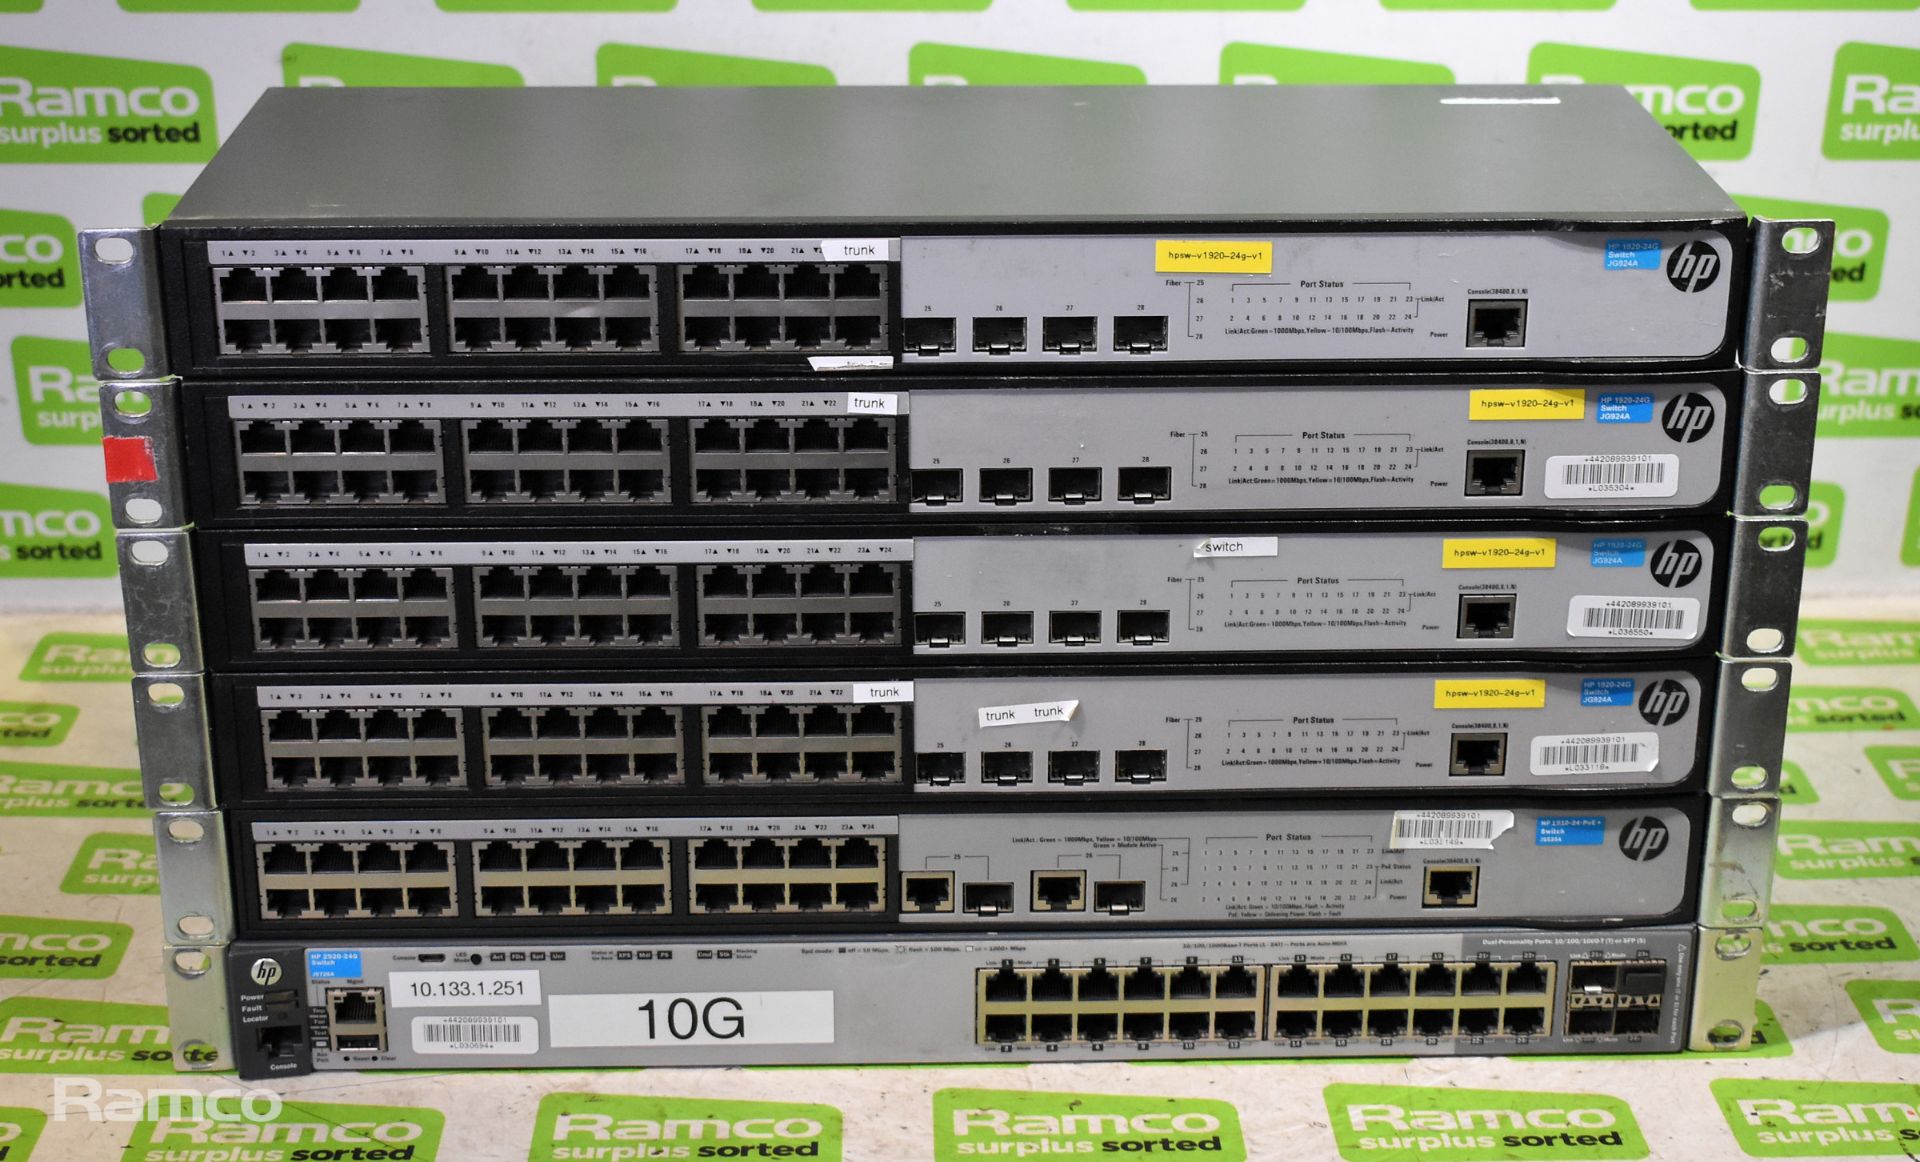 4x HP JG924A 1920-24G 24 port network switches - 1U rack mountable, HP JG539A 1910-24-PoE + 24 port